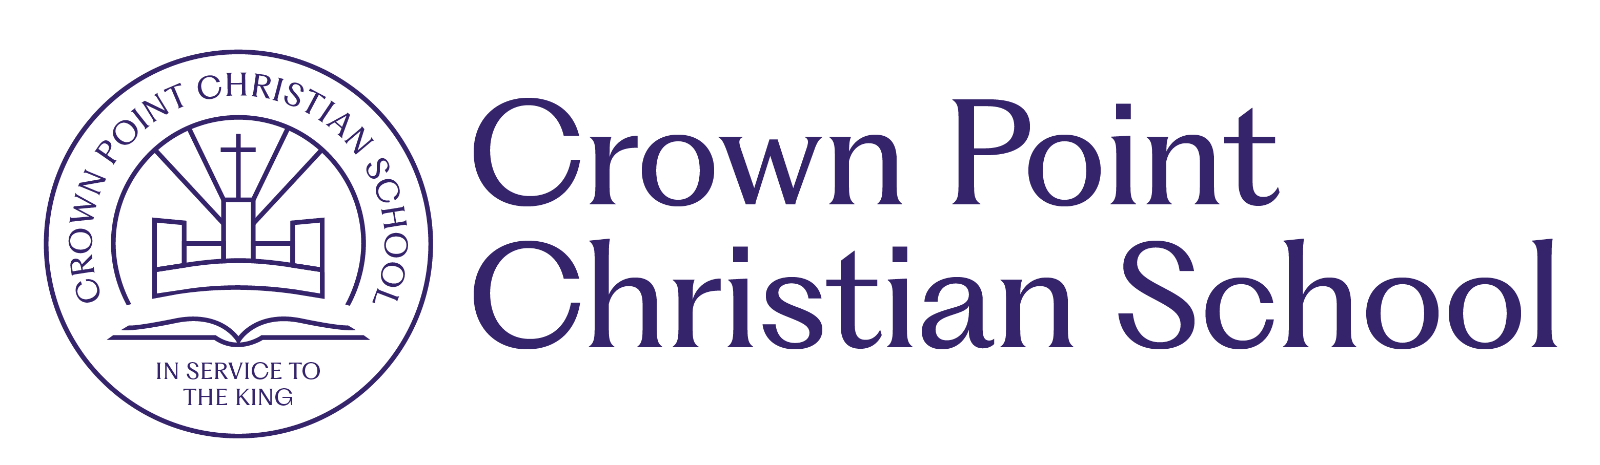 crownpoint-christian-school-main-logo-purple.png